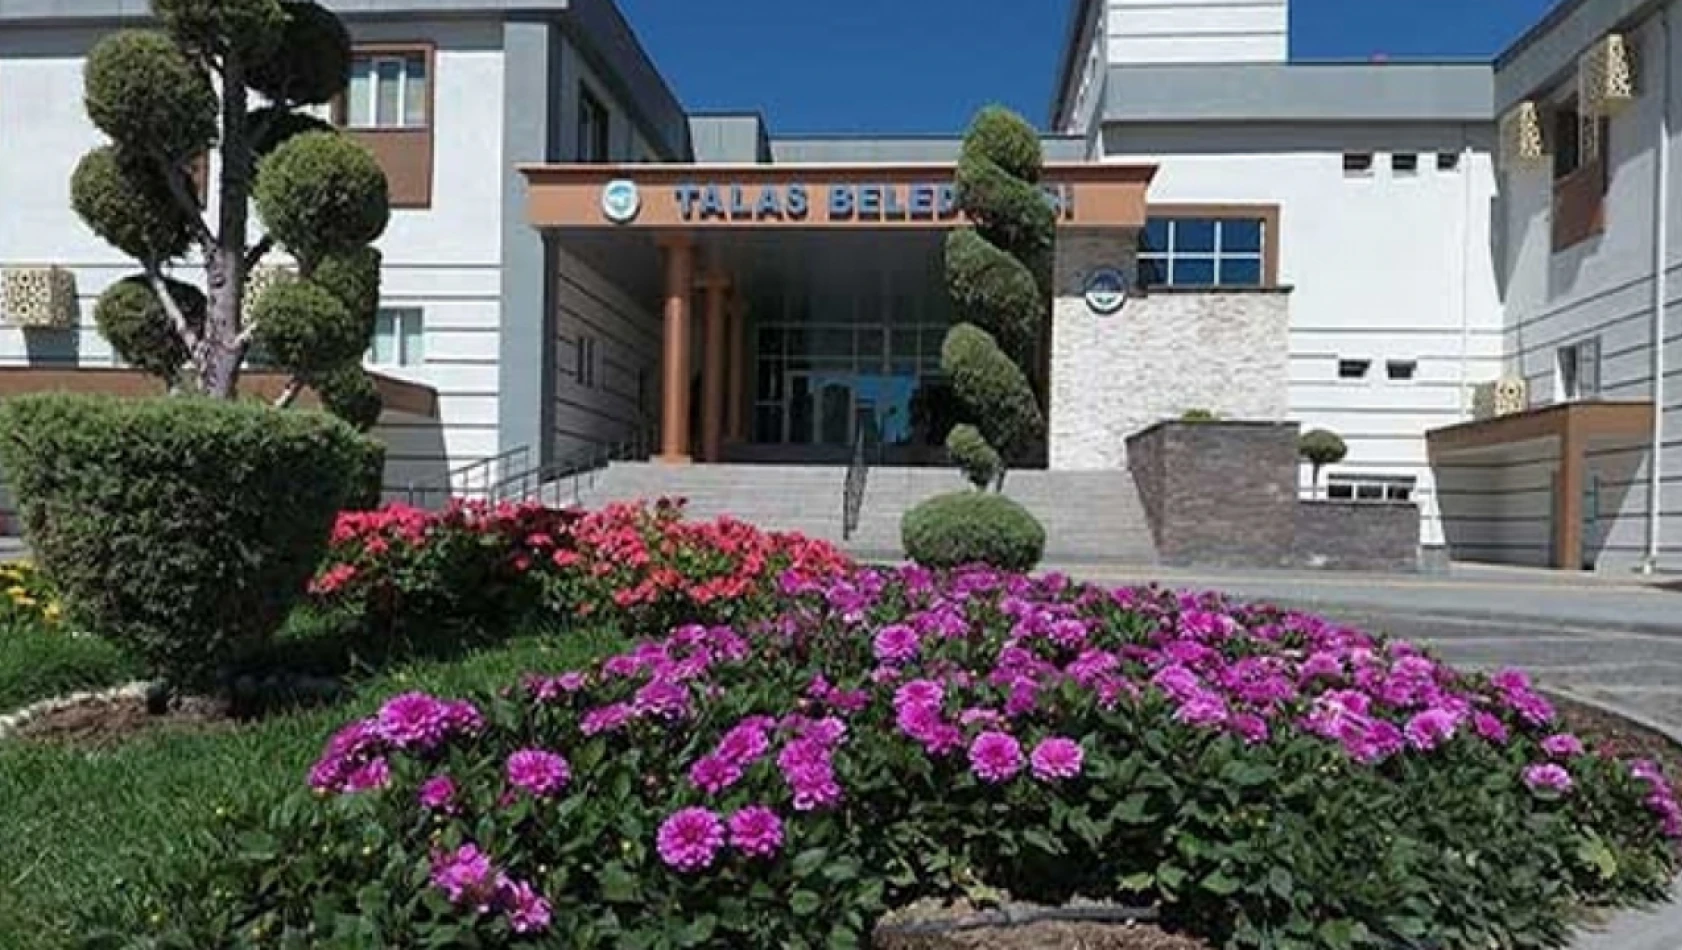 Talas Belediyesi'nde 19 Mayıs'a özel sergi!